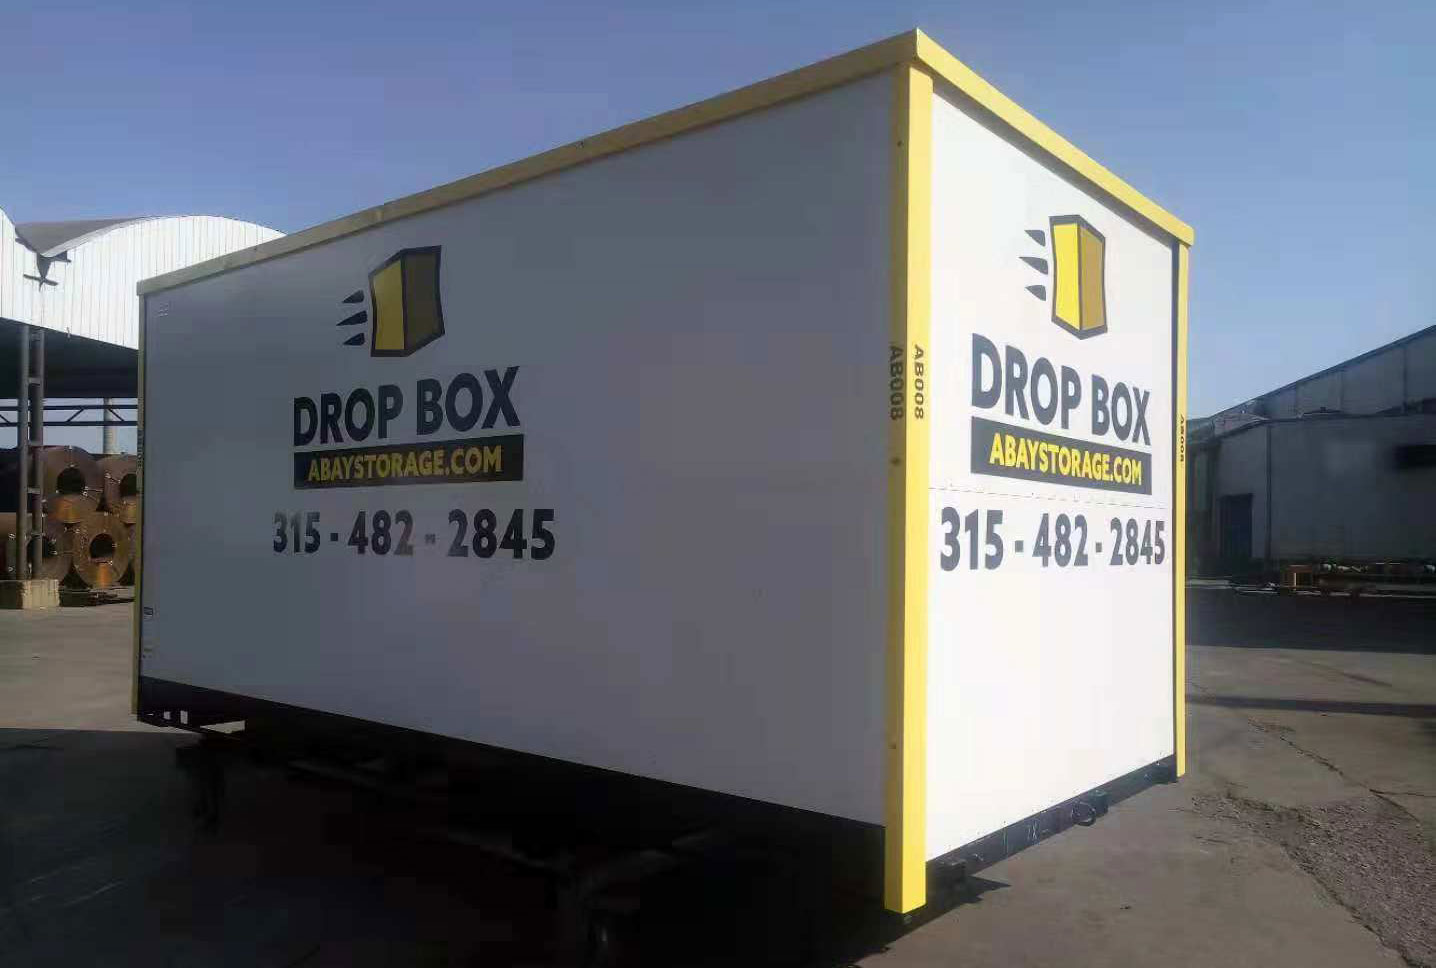 Portable Self Storage- ABay Storage Drop Box